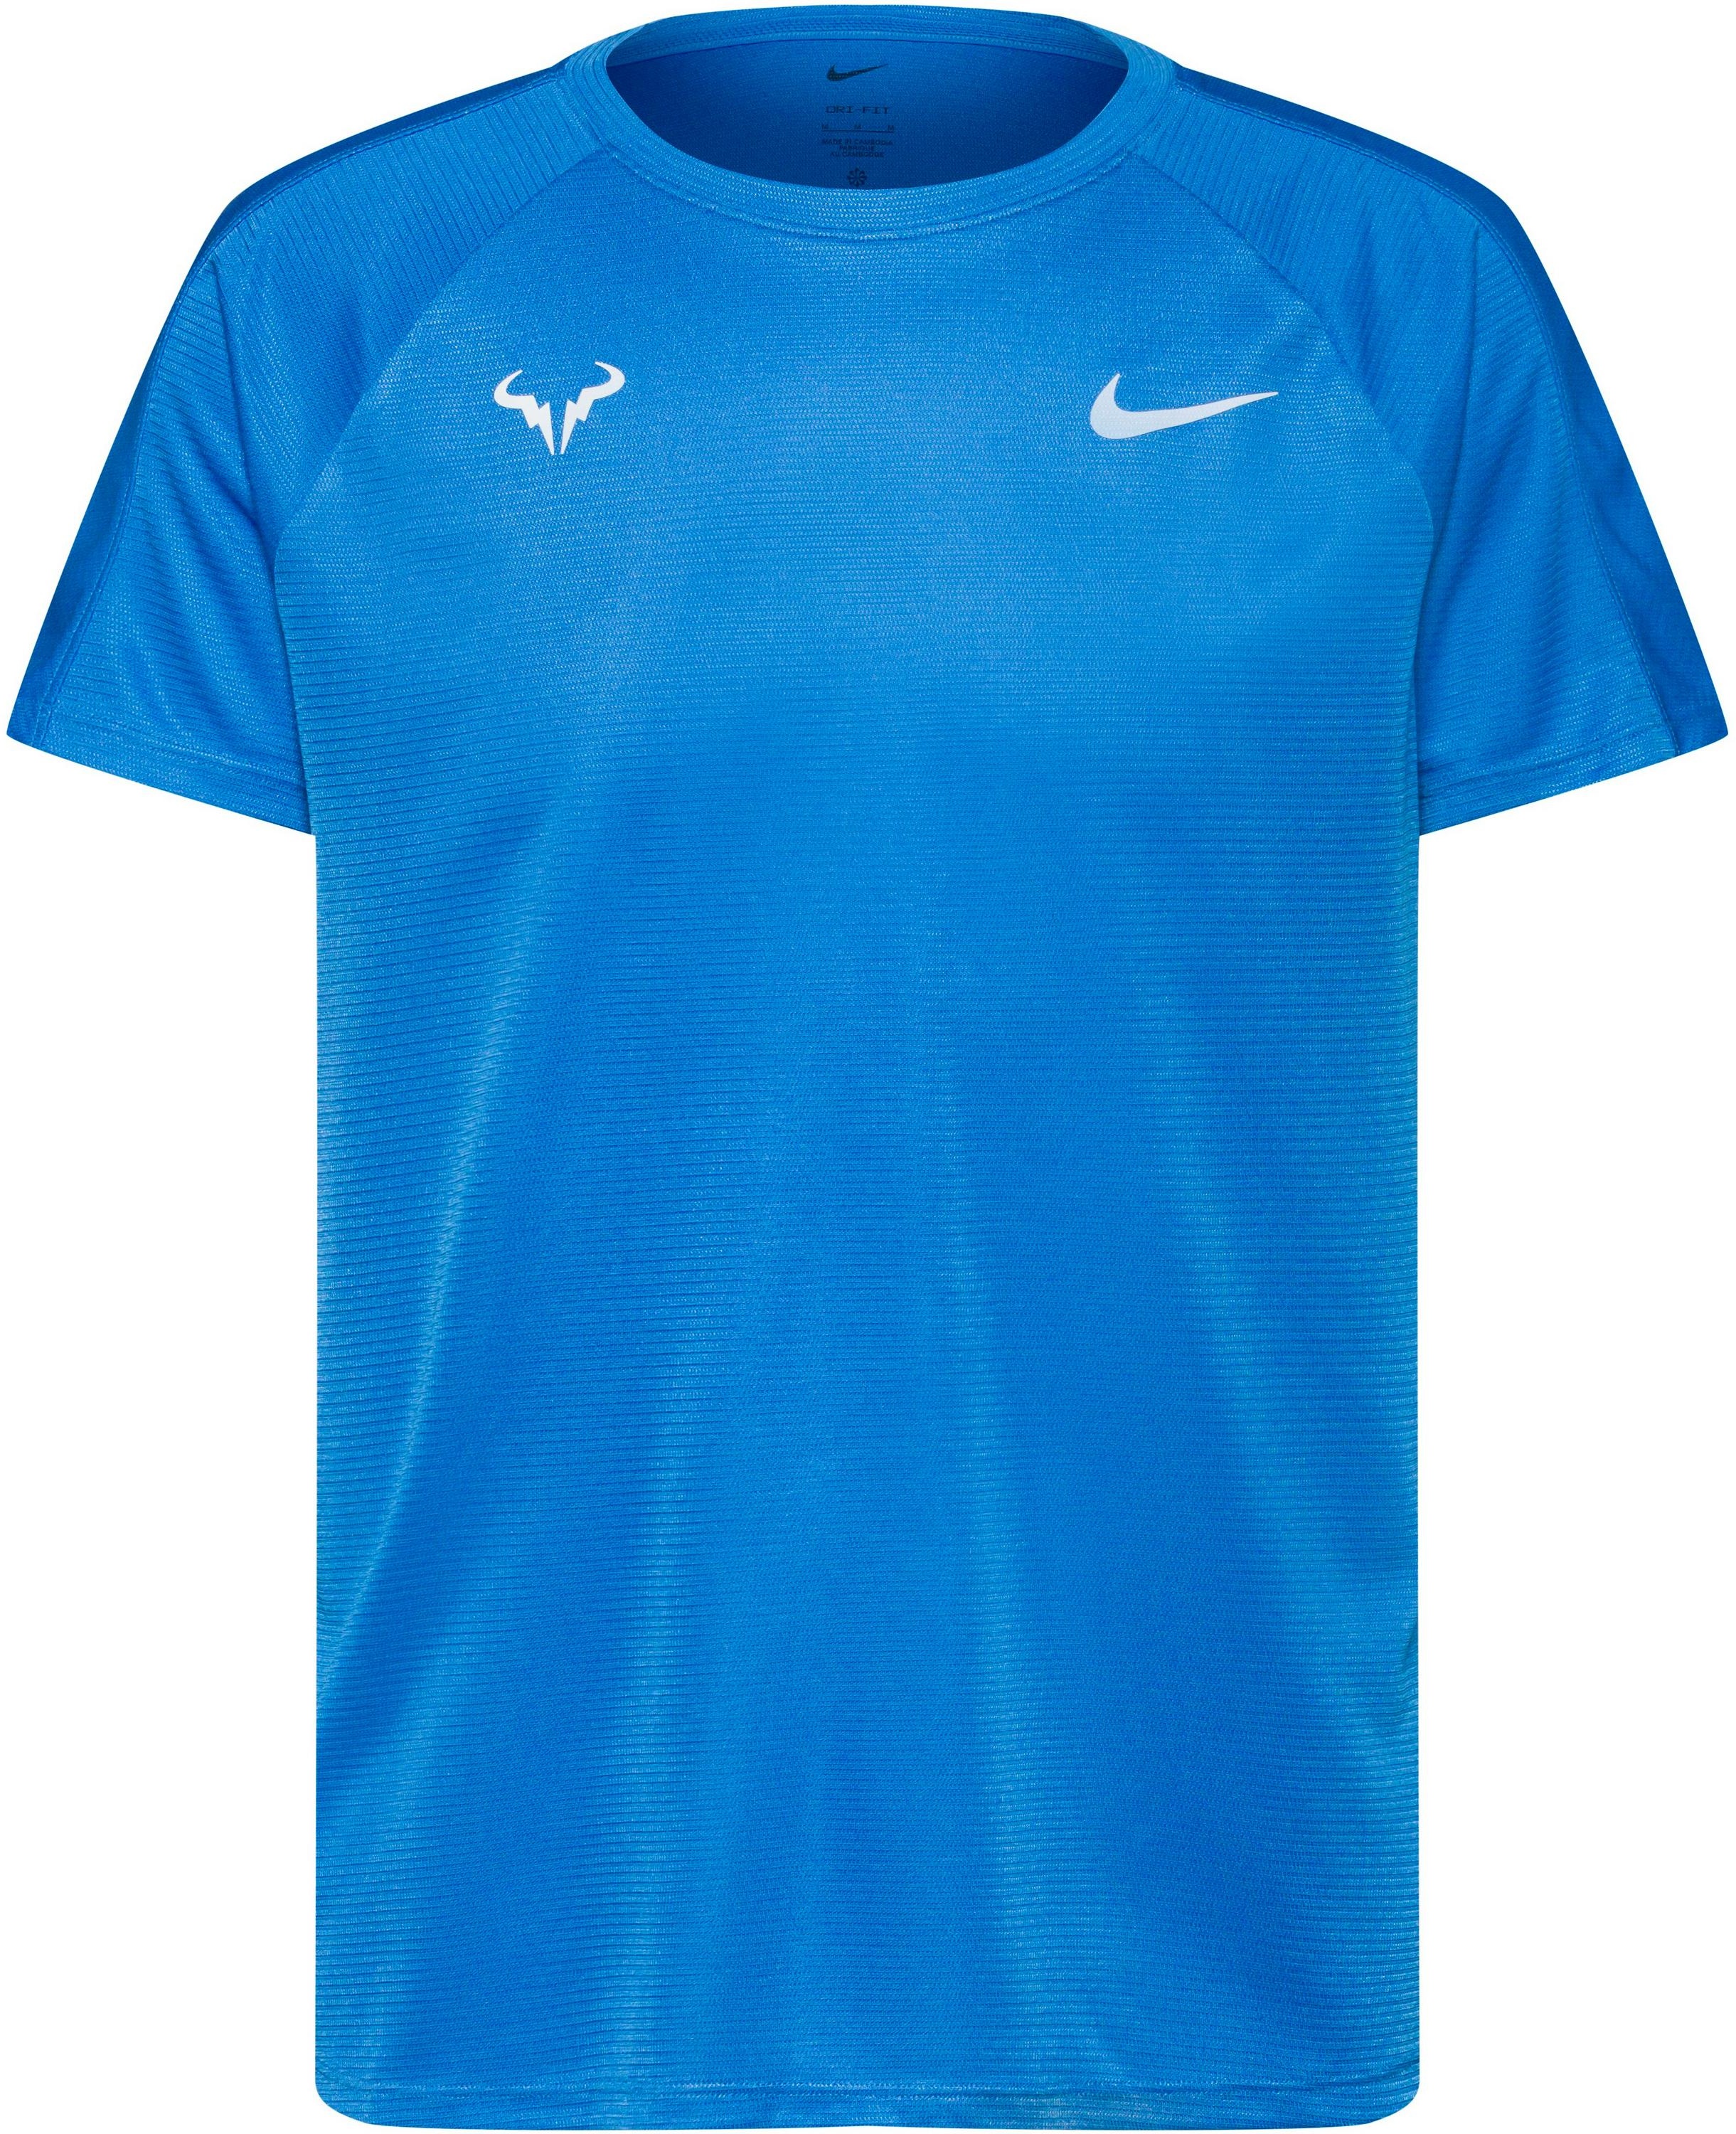 Nike Rafa Nadal Tennisshirt Herren in lt photo blue-white, Größe M - blau